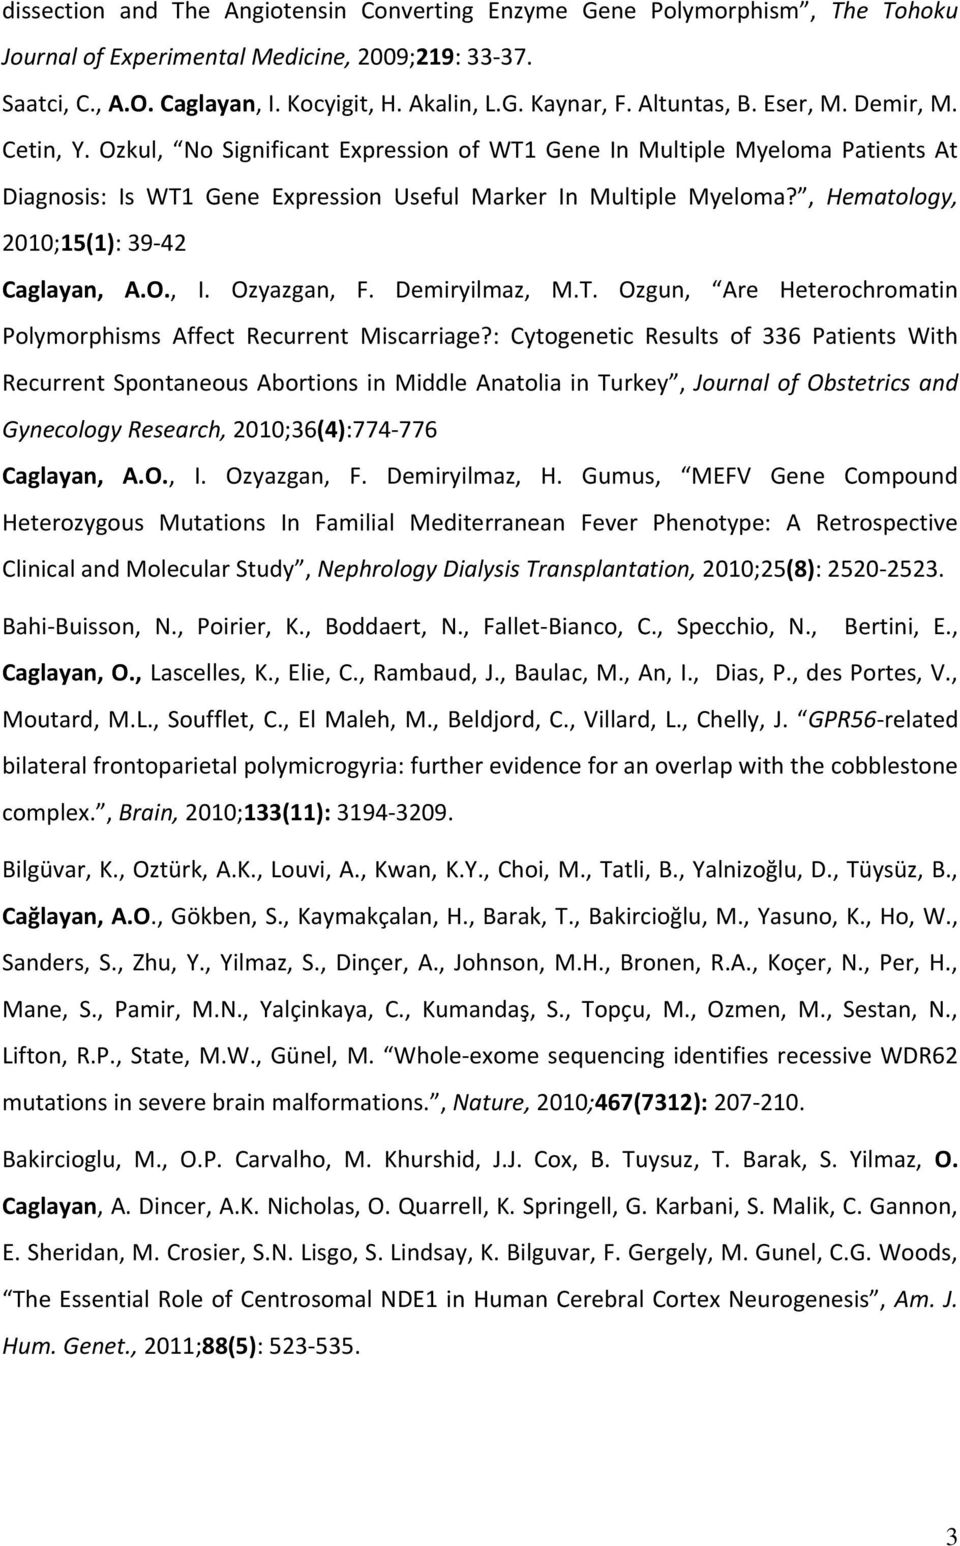 , Hematology, 2010;15(1): 39-42 Caglayan, A.O., I. Ozyazgan, F. Demiryilmaz, M.T. Ozgun, Are Heterochromatin Polymorphisms Affect Recurrent Miscarriage?